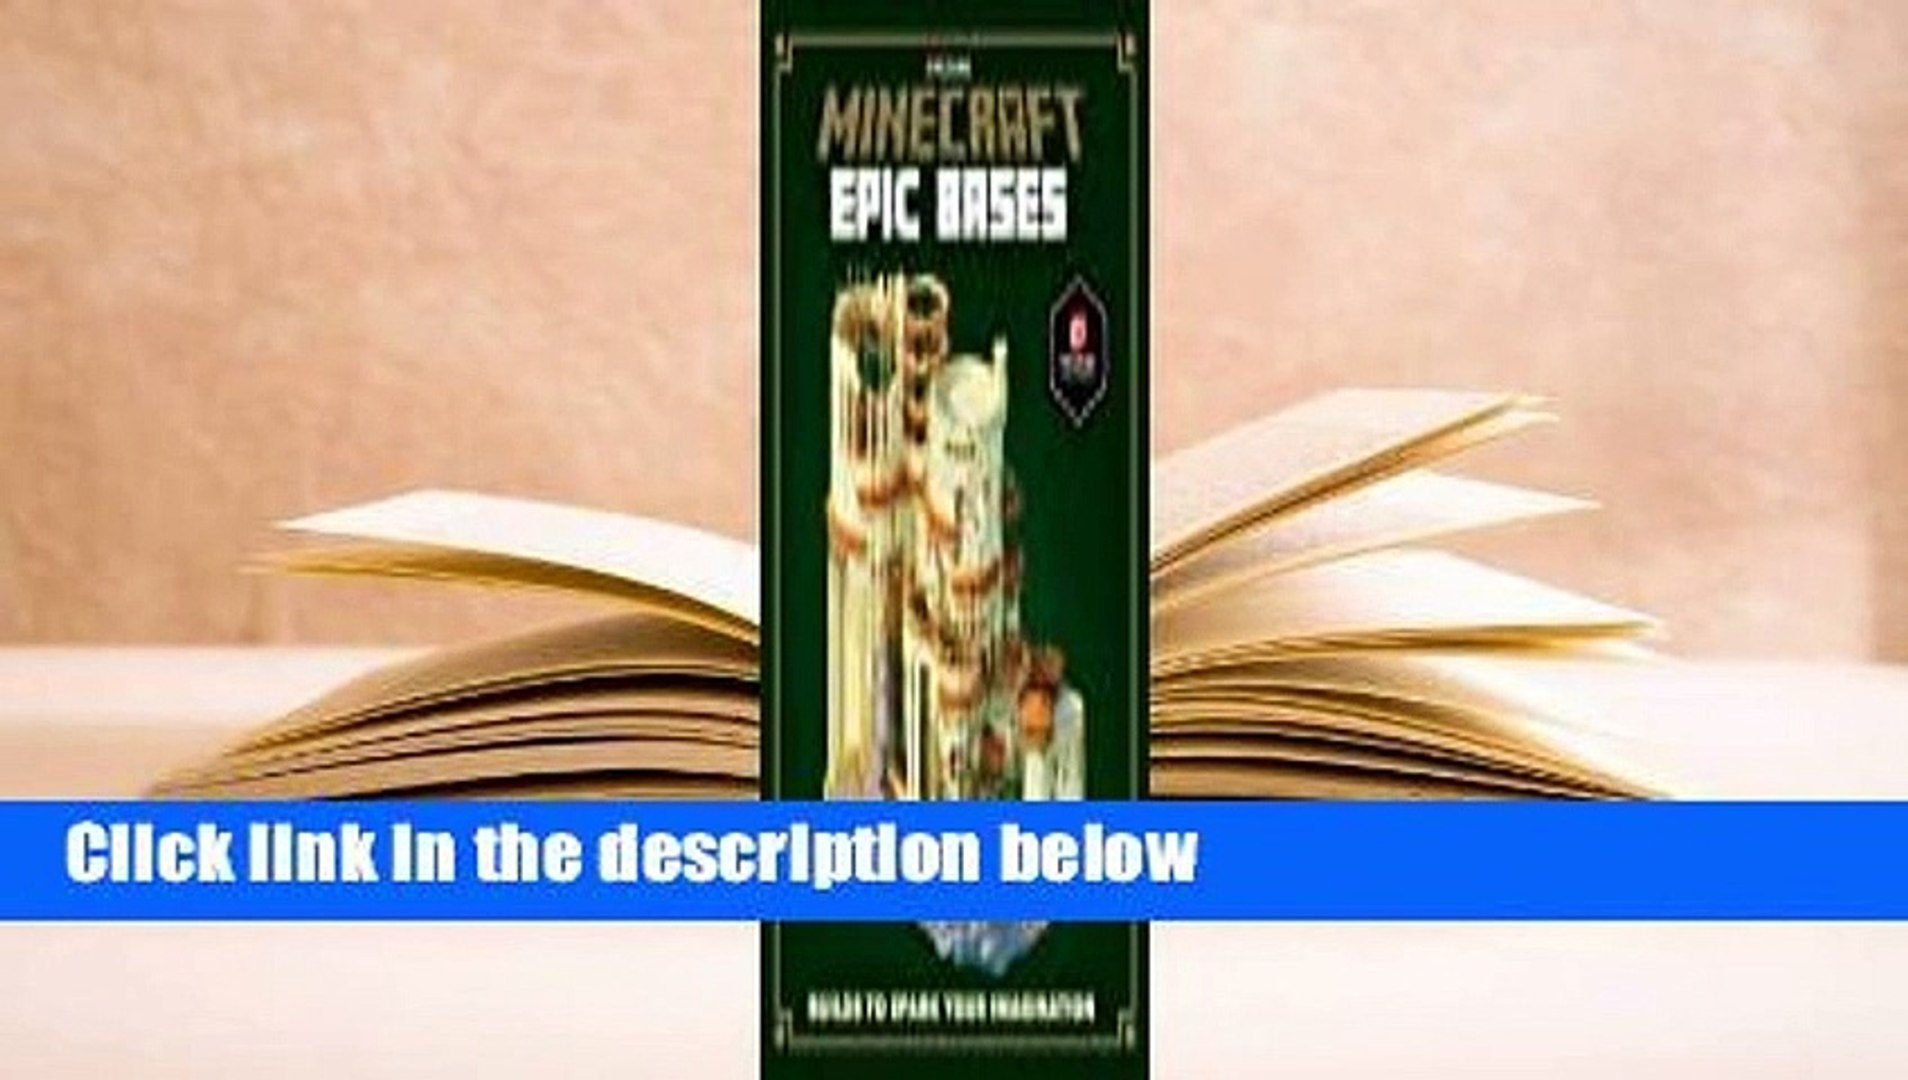 Minecraft: Epic Bases